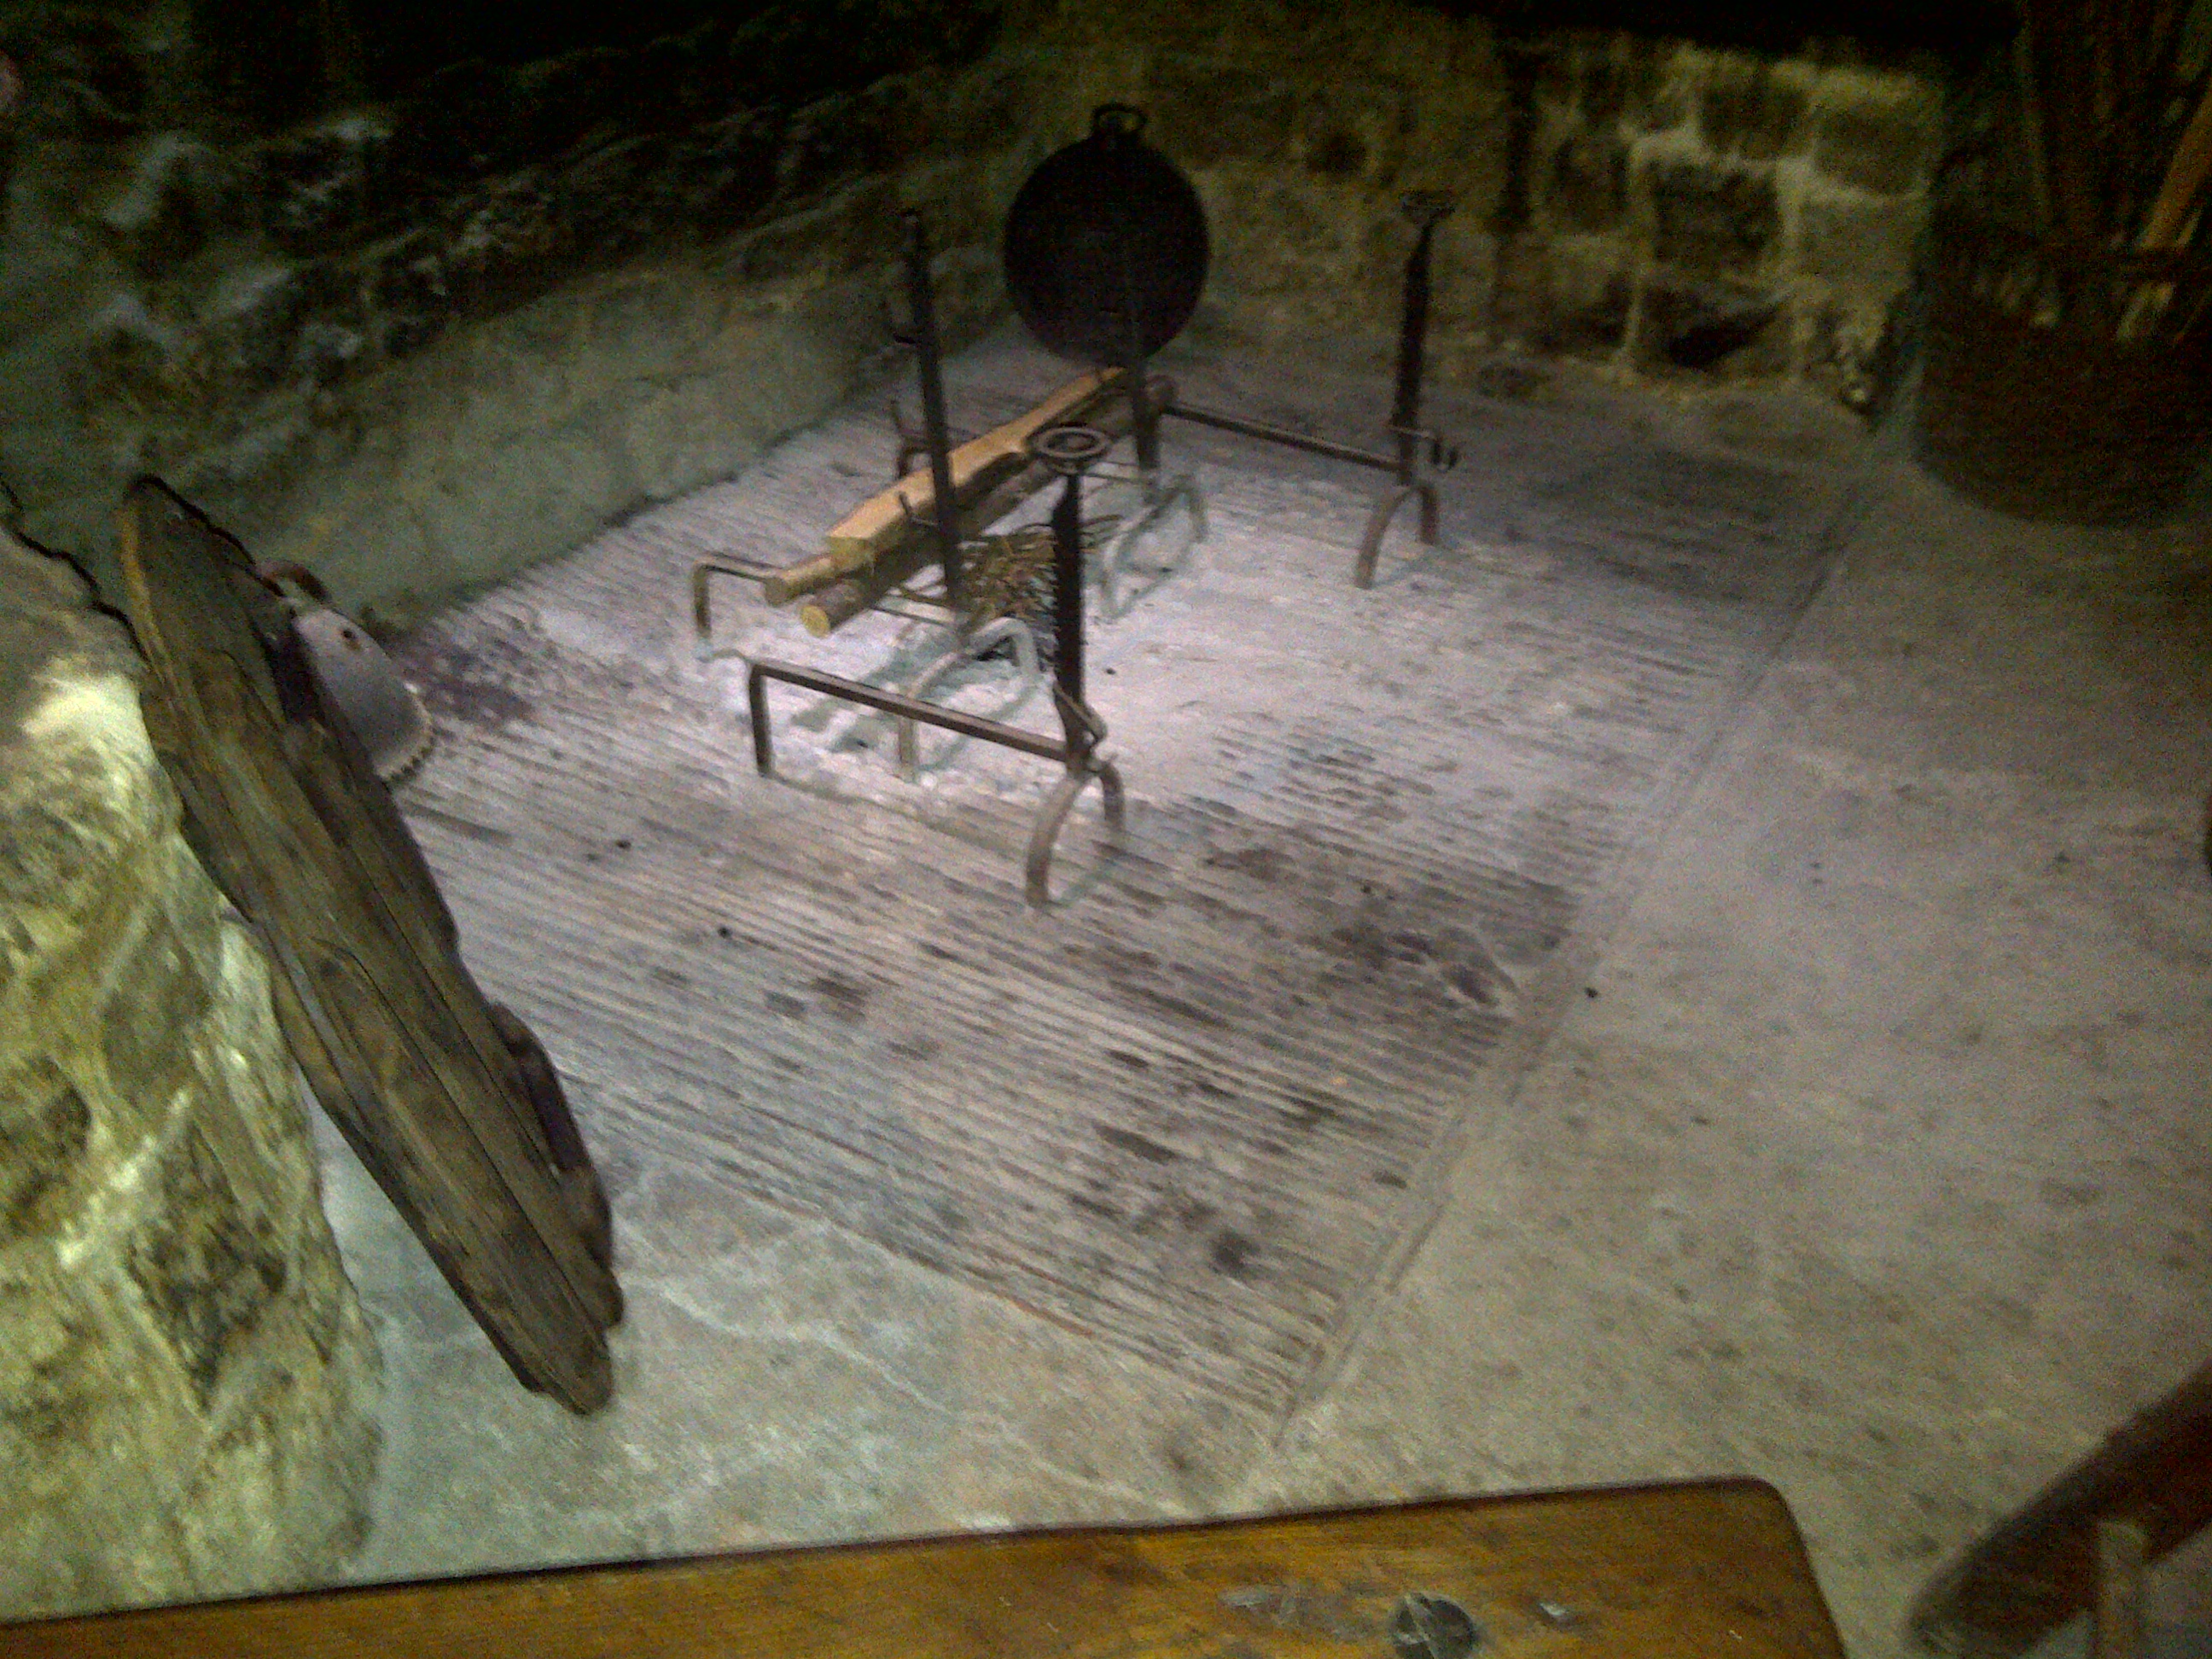  Inside the Wealden House from Chiddingstone - open fireplace